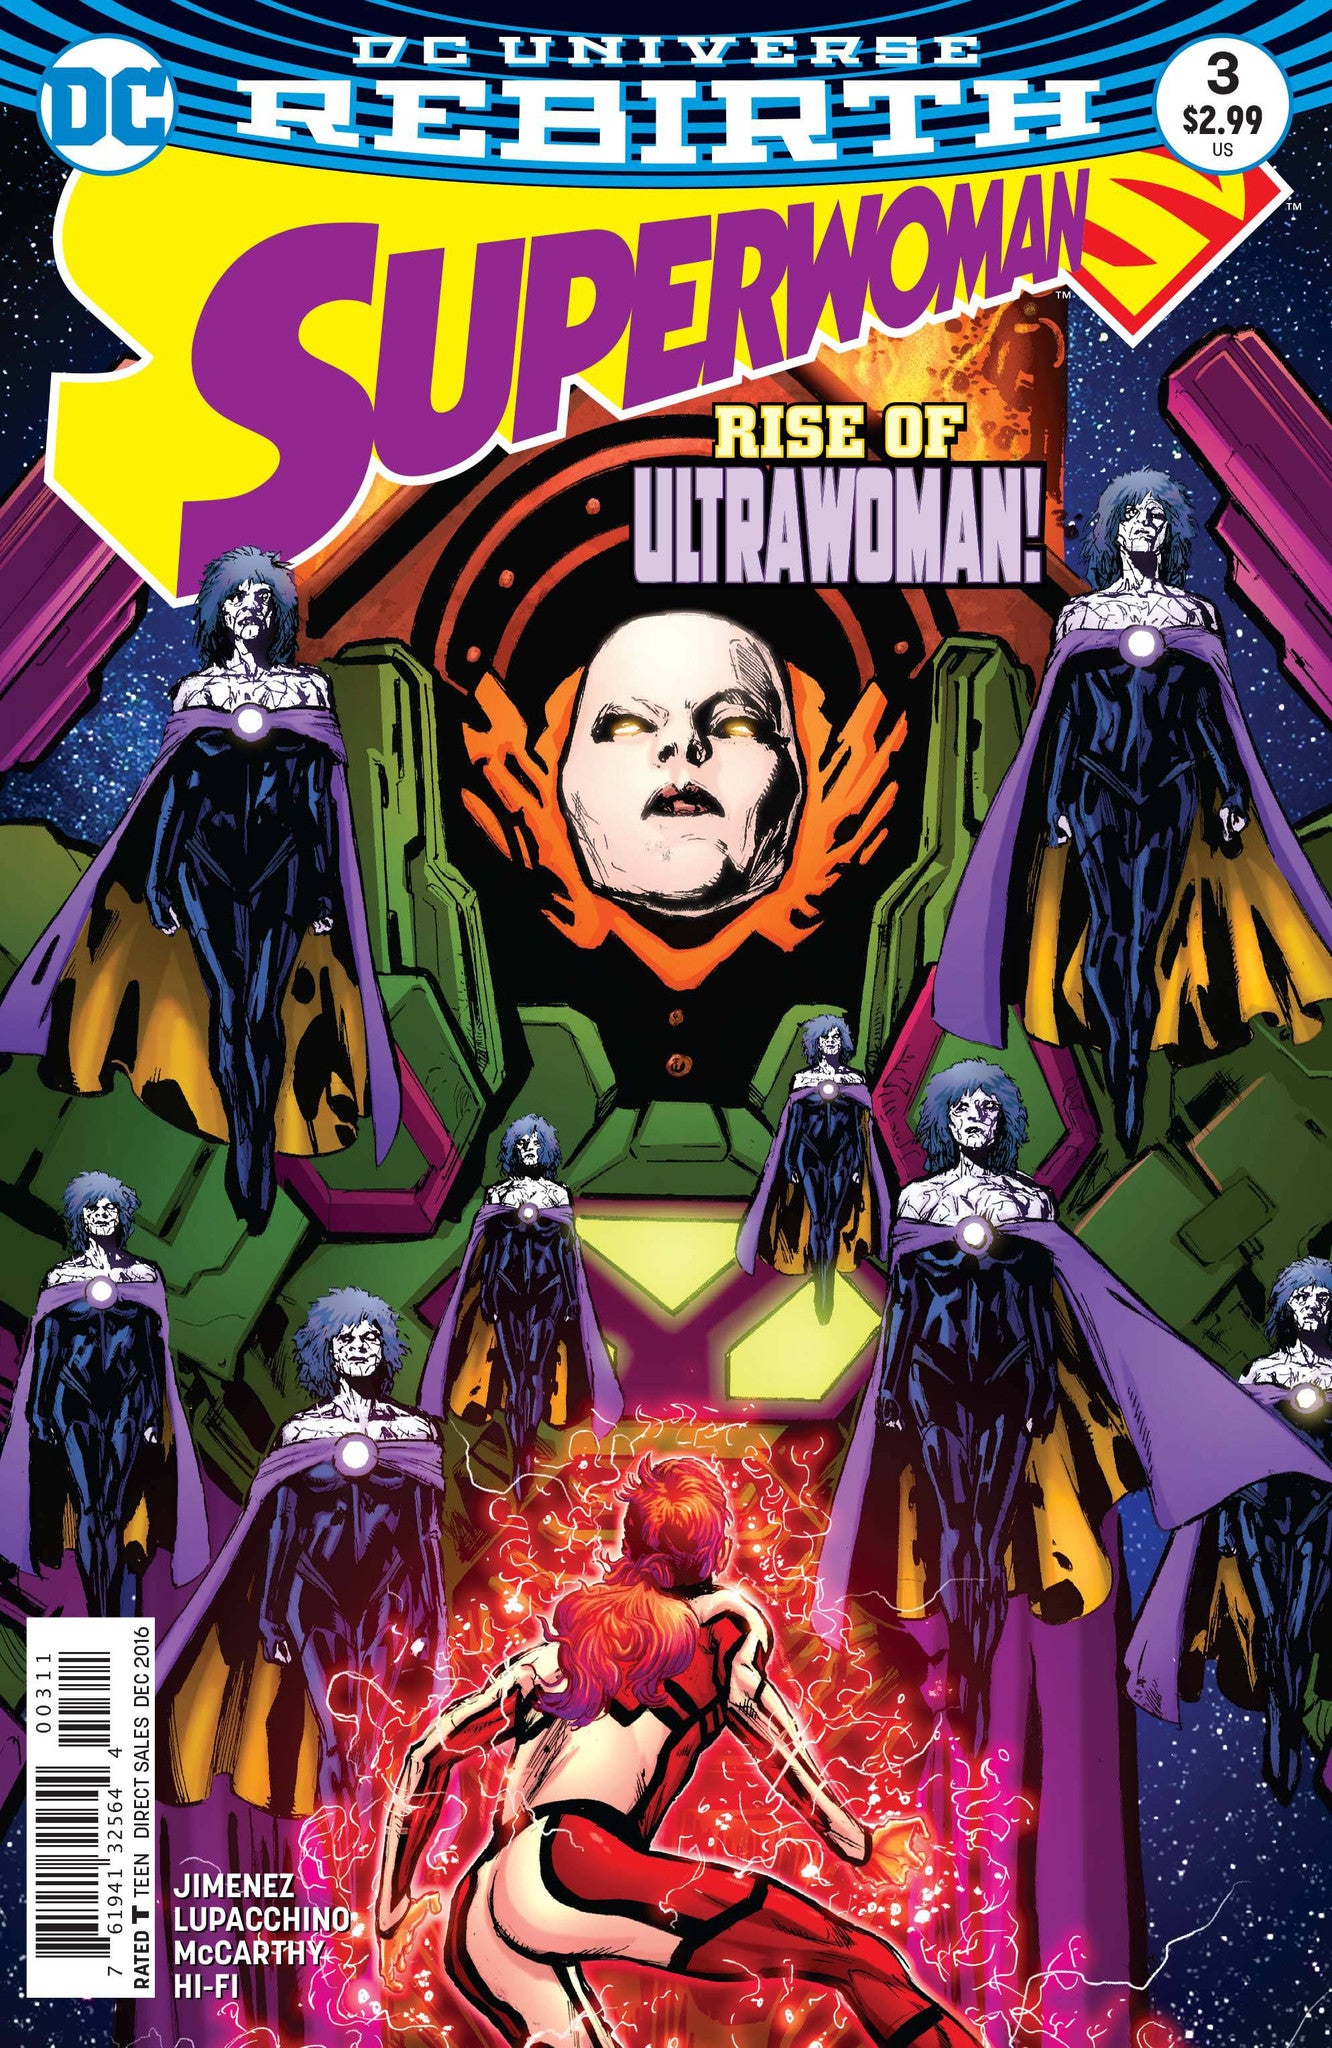 SUPERWOMAN #3 COVER